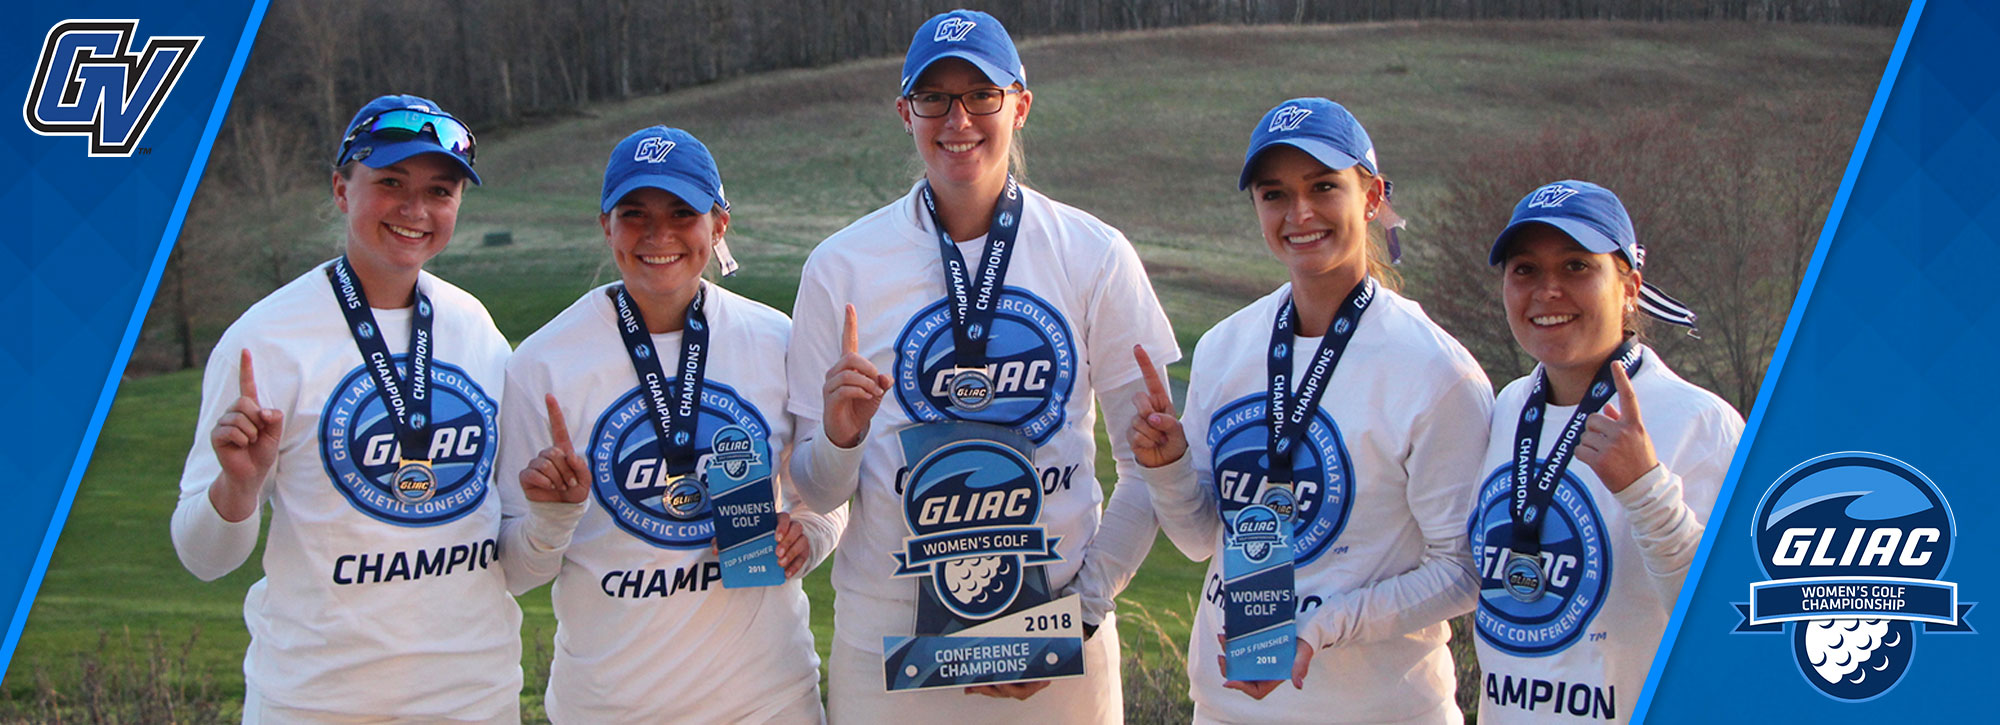 Grand Valley State Wins 2018 GLIAC Women's Golf Championship; Chipman Medalist